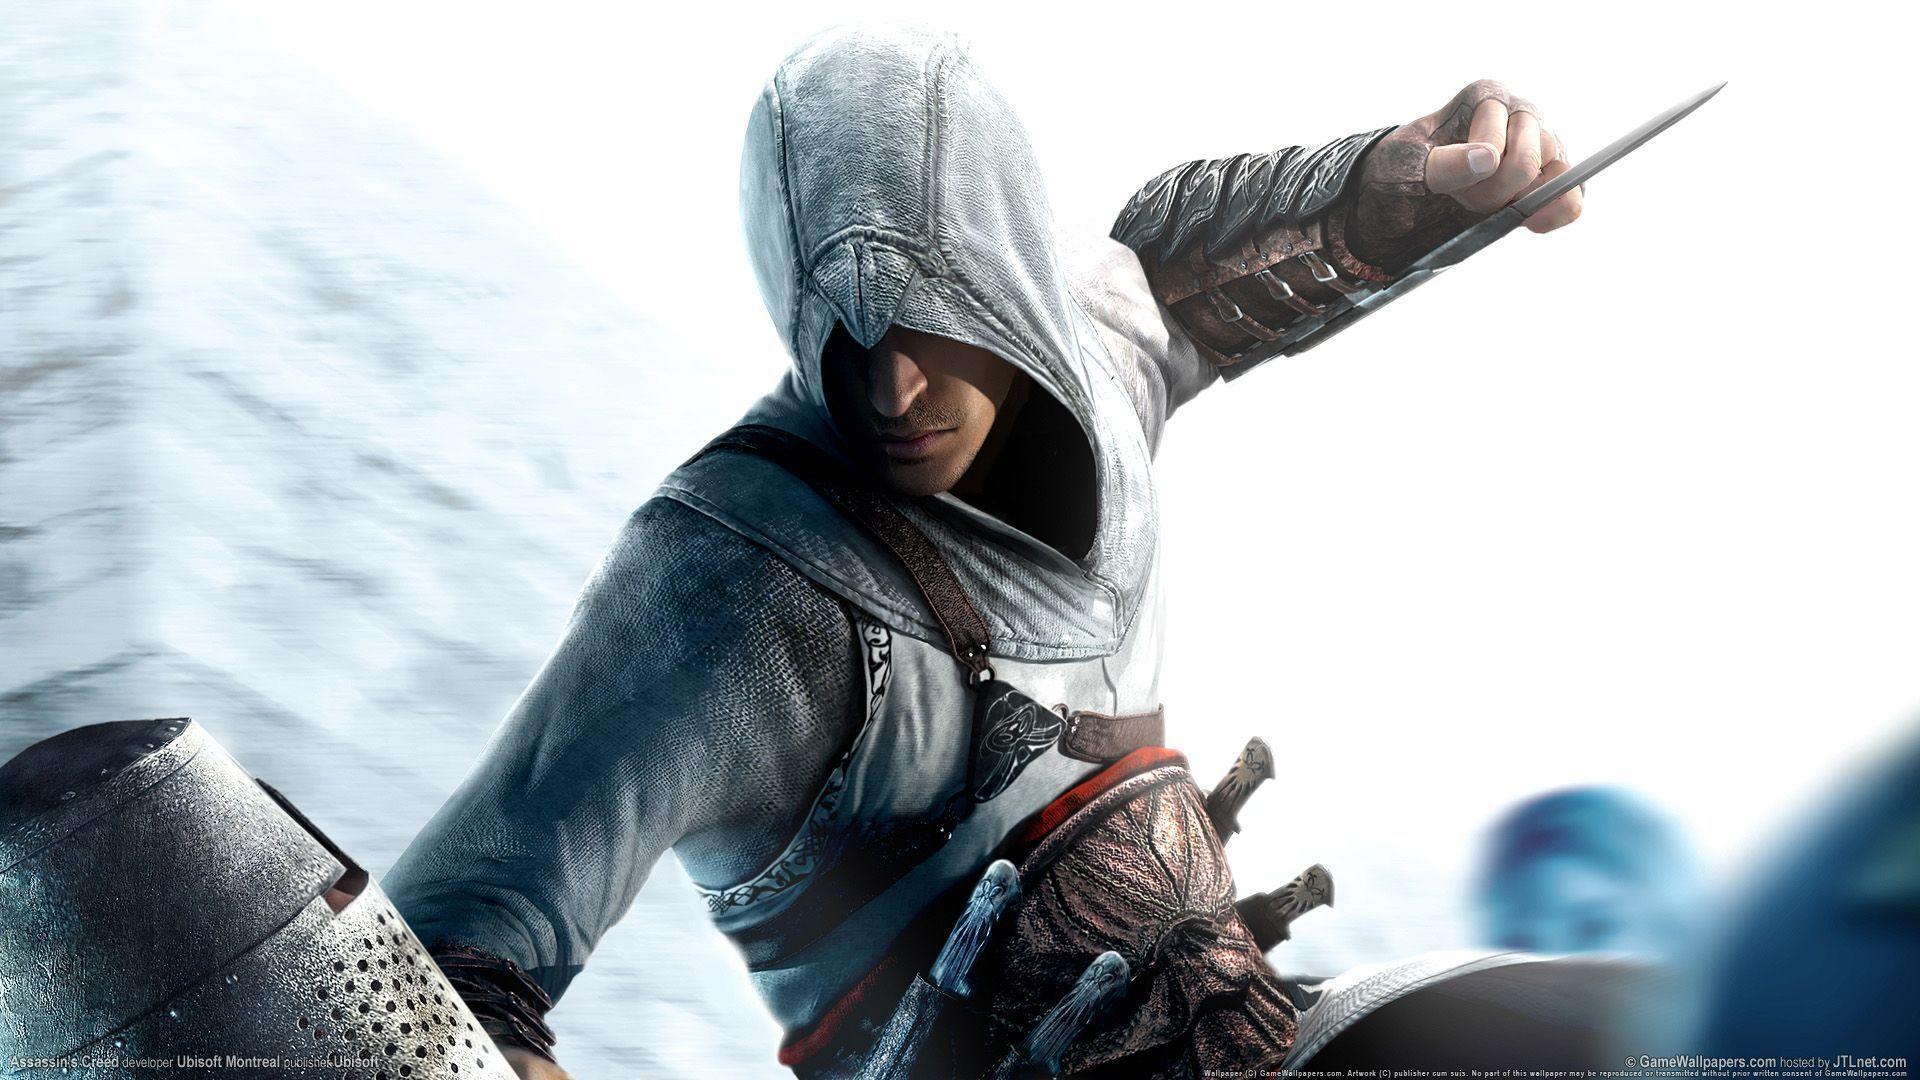 Assassins Creed Game Wallpaper